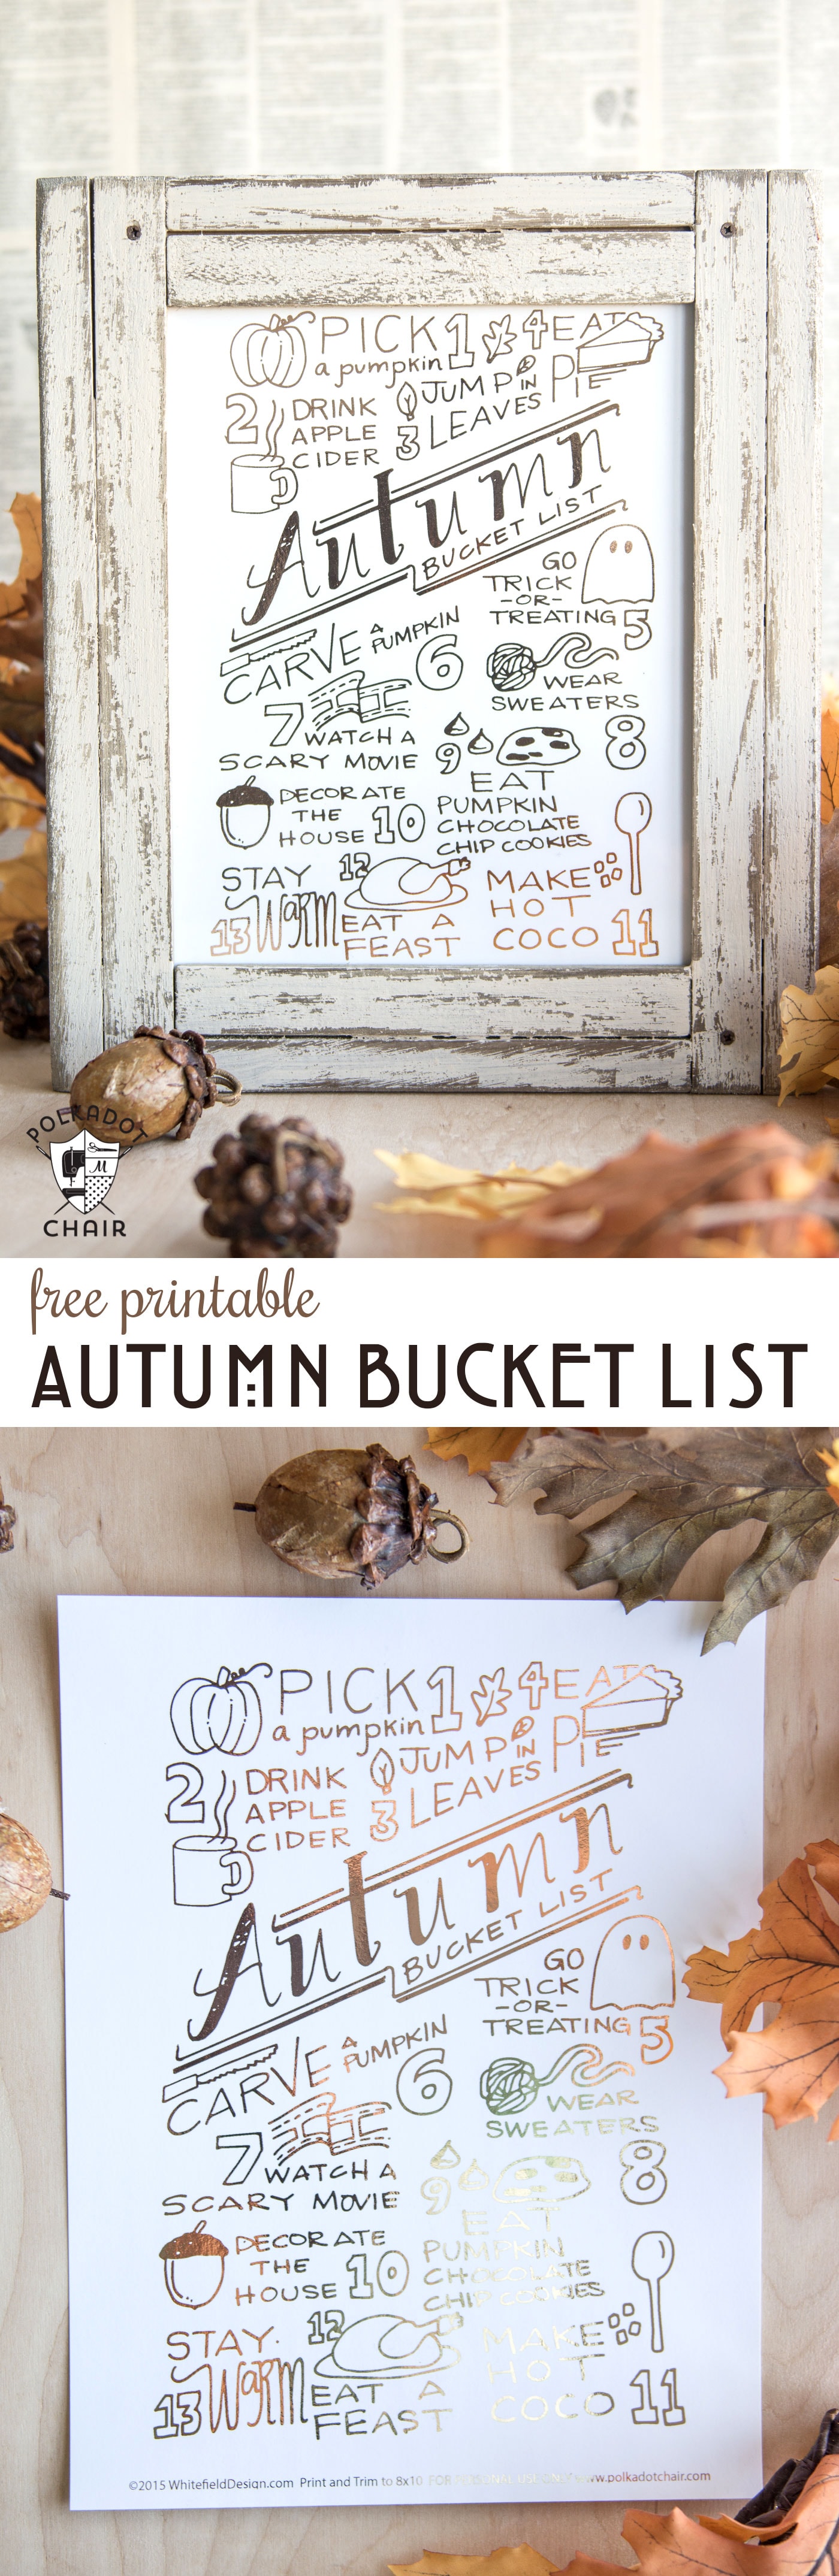 free-printable-fall-autumn-bucket-list-polka-dot-chair